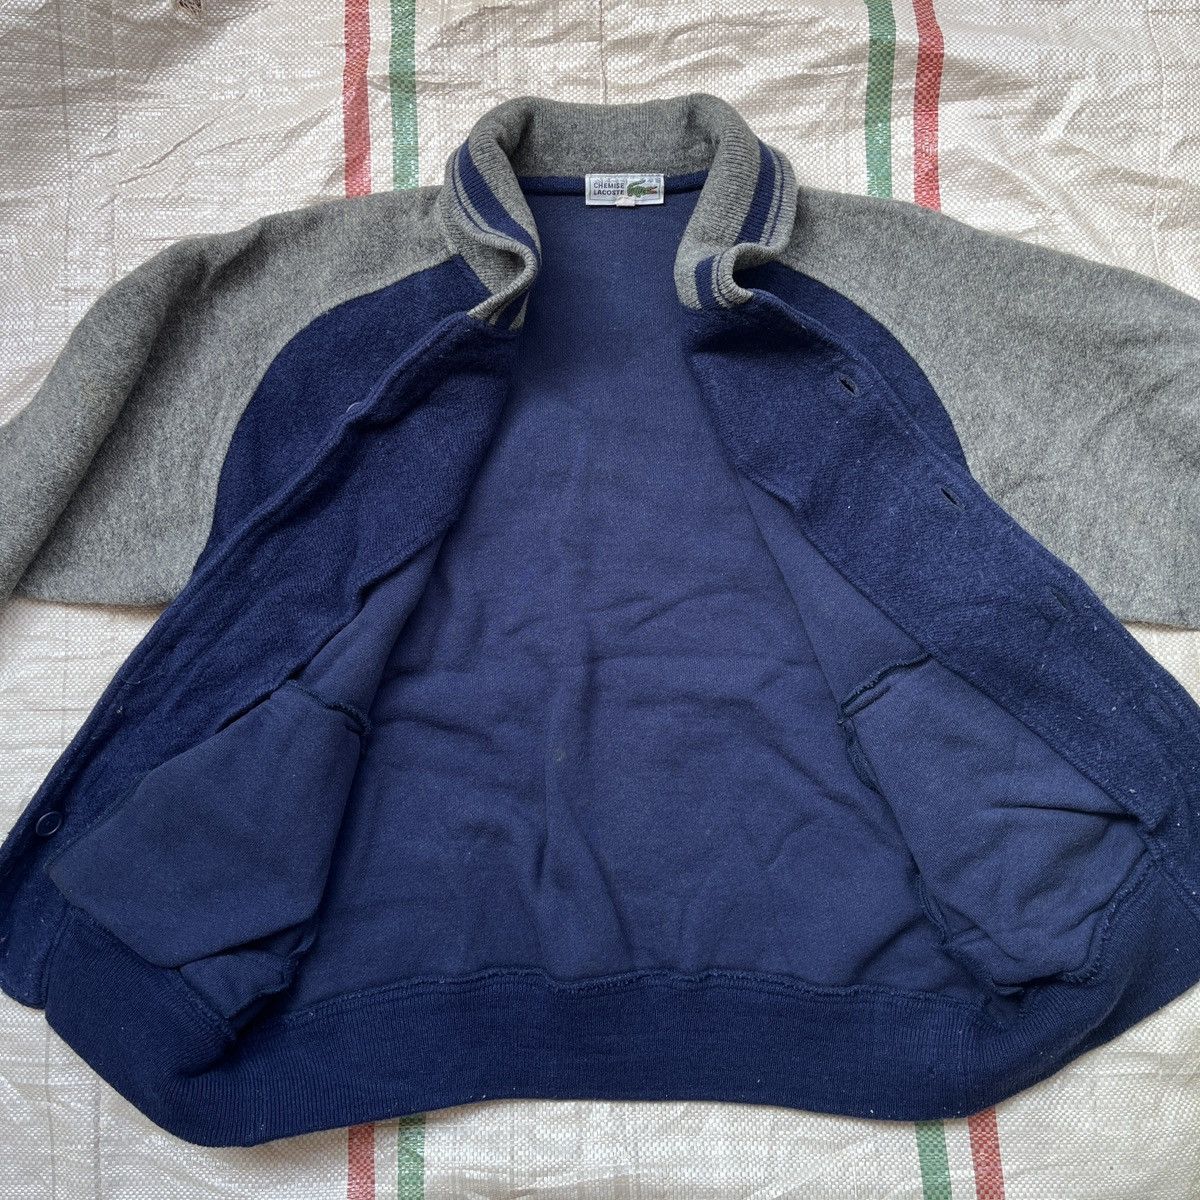 Bomber Style Jacket Lacoste Vintage 80s Sweater Japan - 15